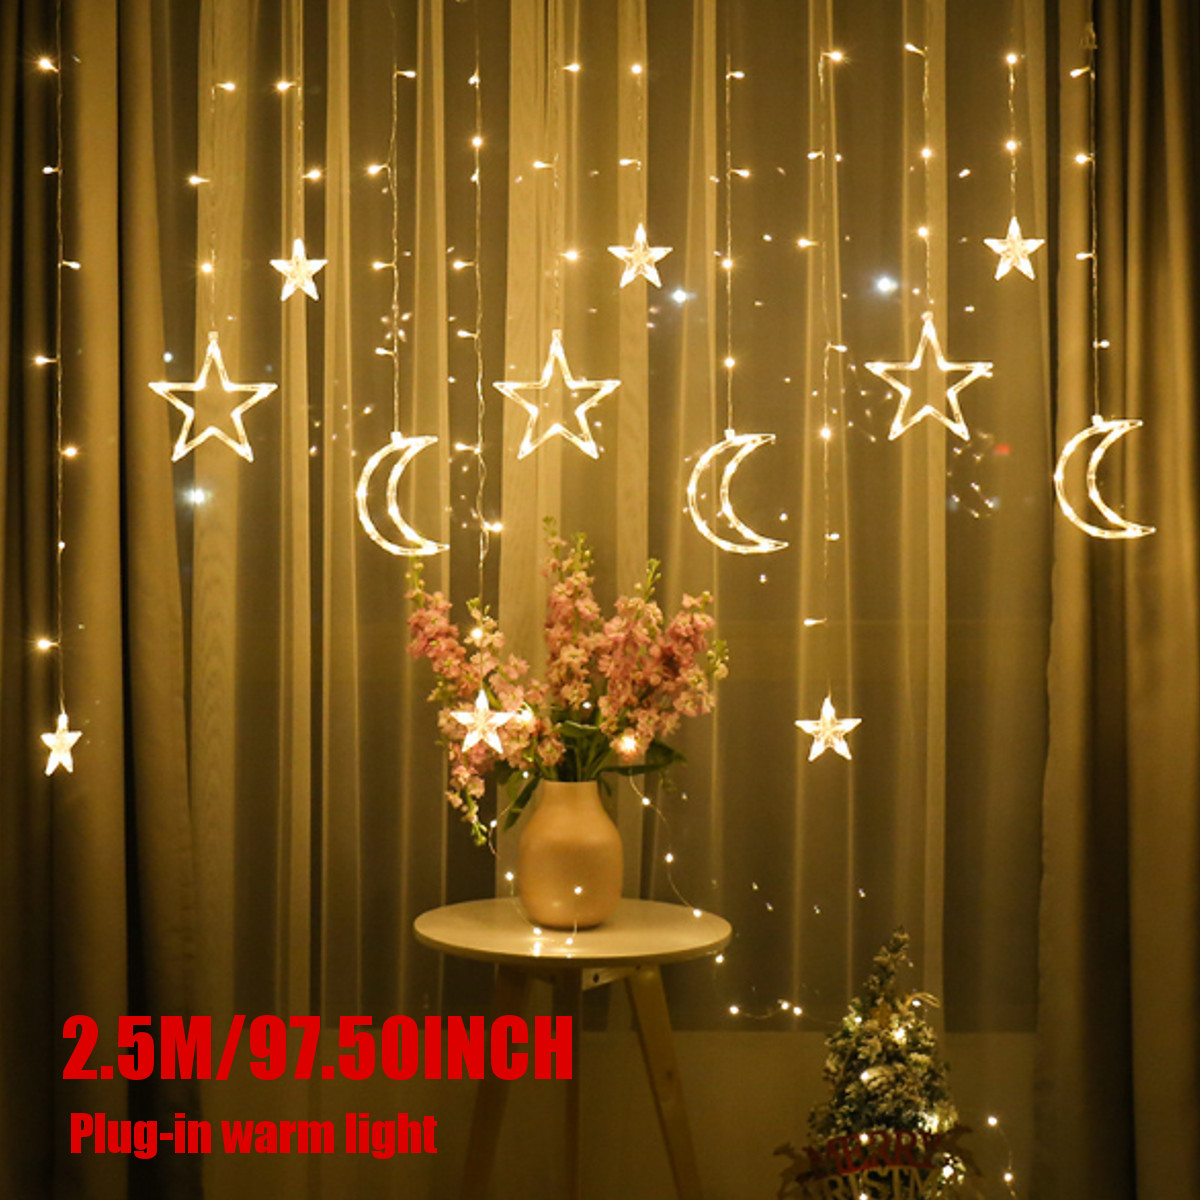 25M-35M-USB-Plug-In-LED-Moon-Star-Curtain-Fairy-Ins-Christmas-String-Light-Bedroom-Romantic-Decor-1594463-7